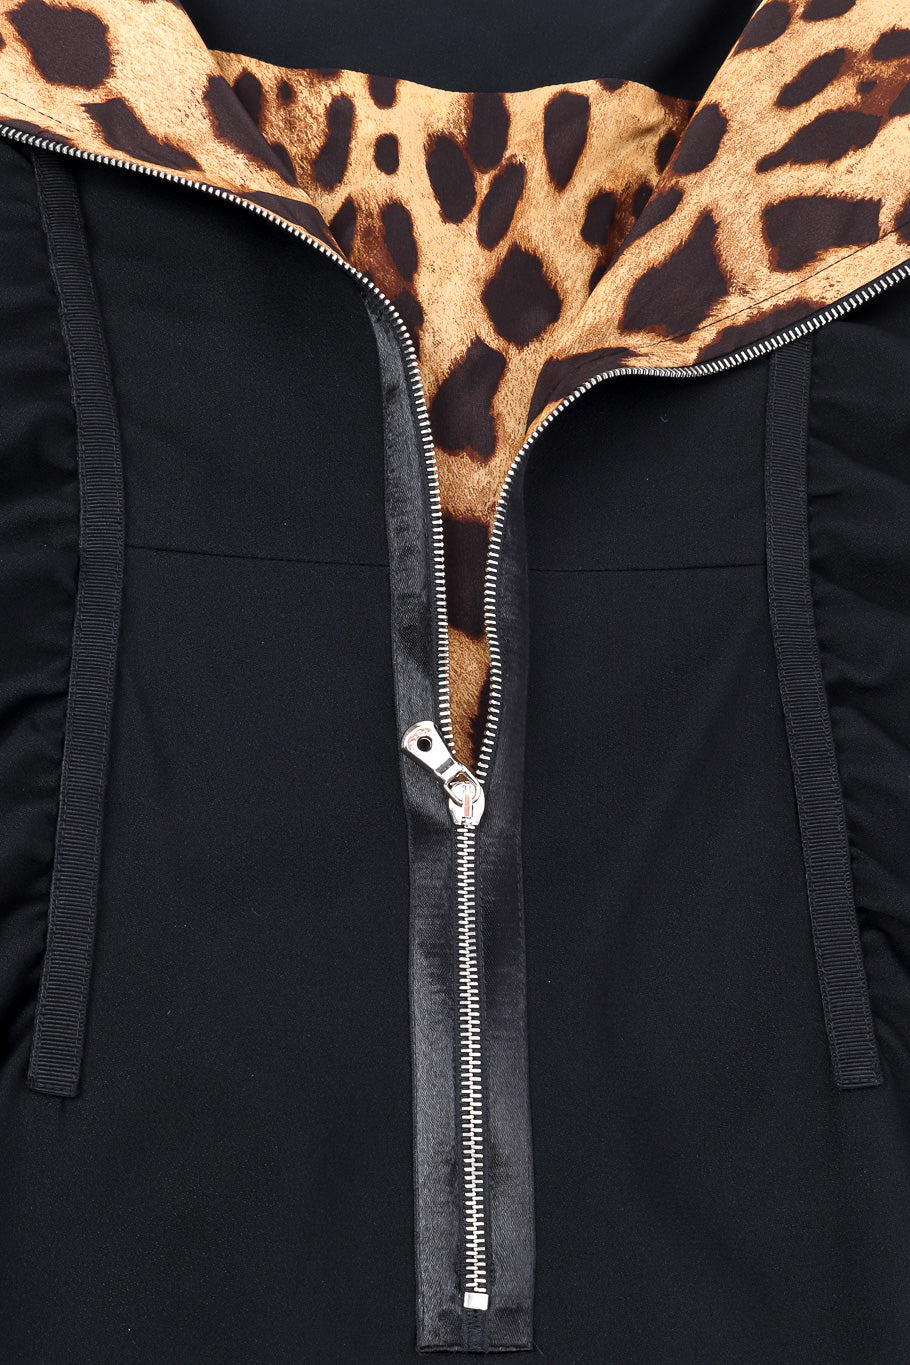 Dolce & Gabbana ruched sheath dress zipper details @recessla